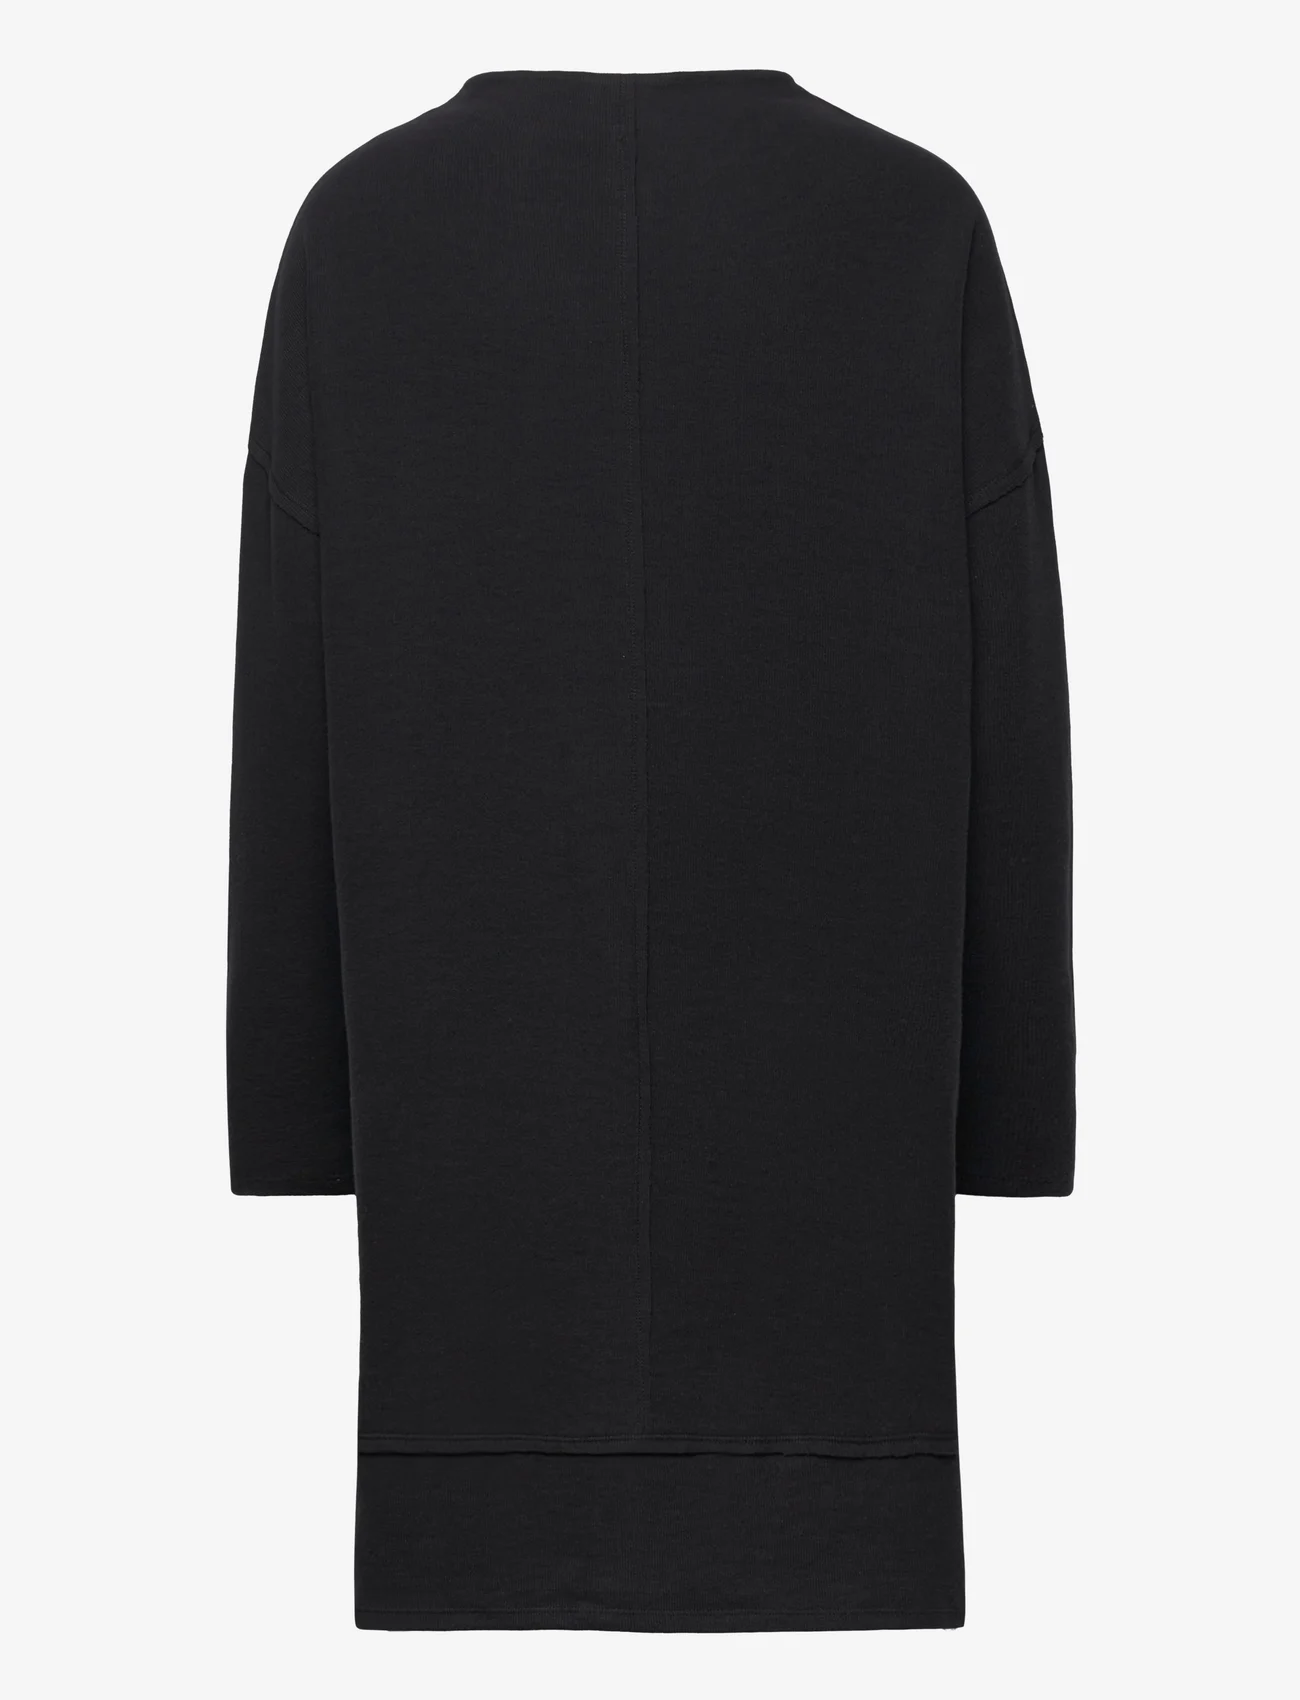 Esprit Casual - Knitted dress with mock neck - stickade klänningar - black - 1